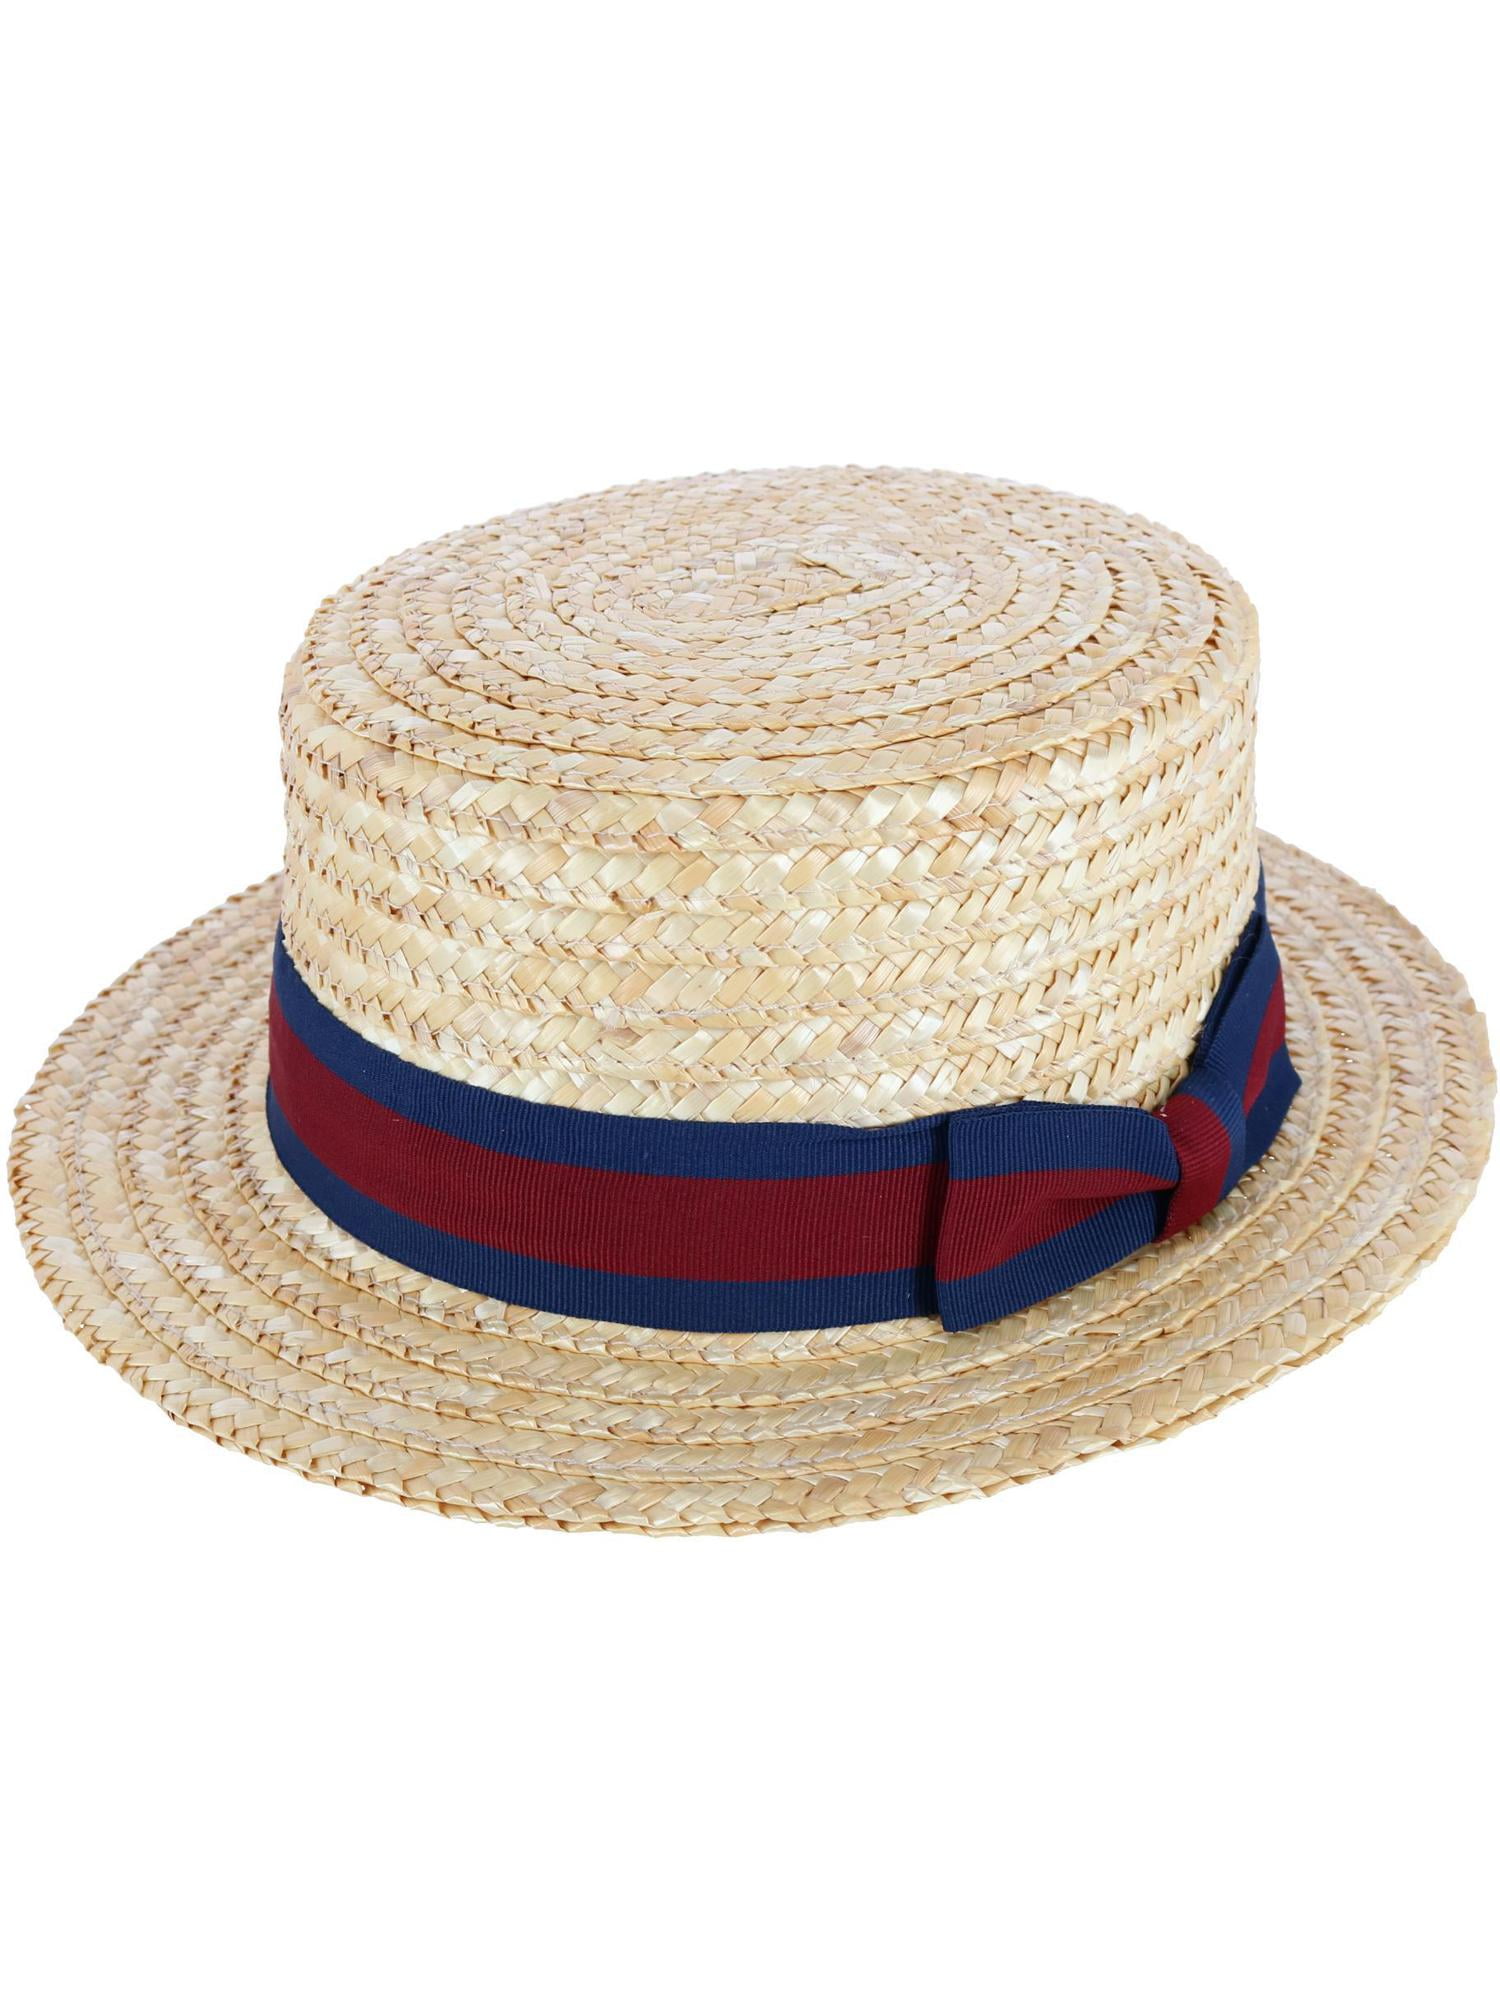 KIDS Fedora Hat Trilby Cuban Style Upturn Short Brim Cap Hat Pan BOY GIRL 